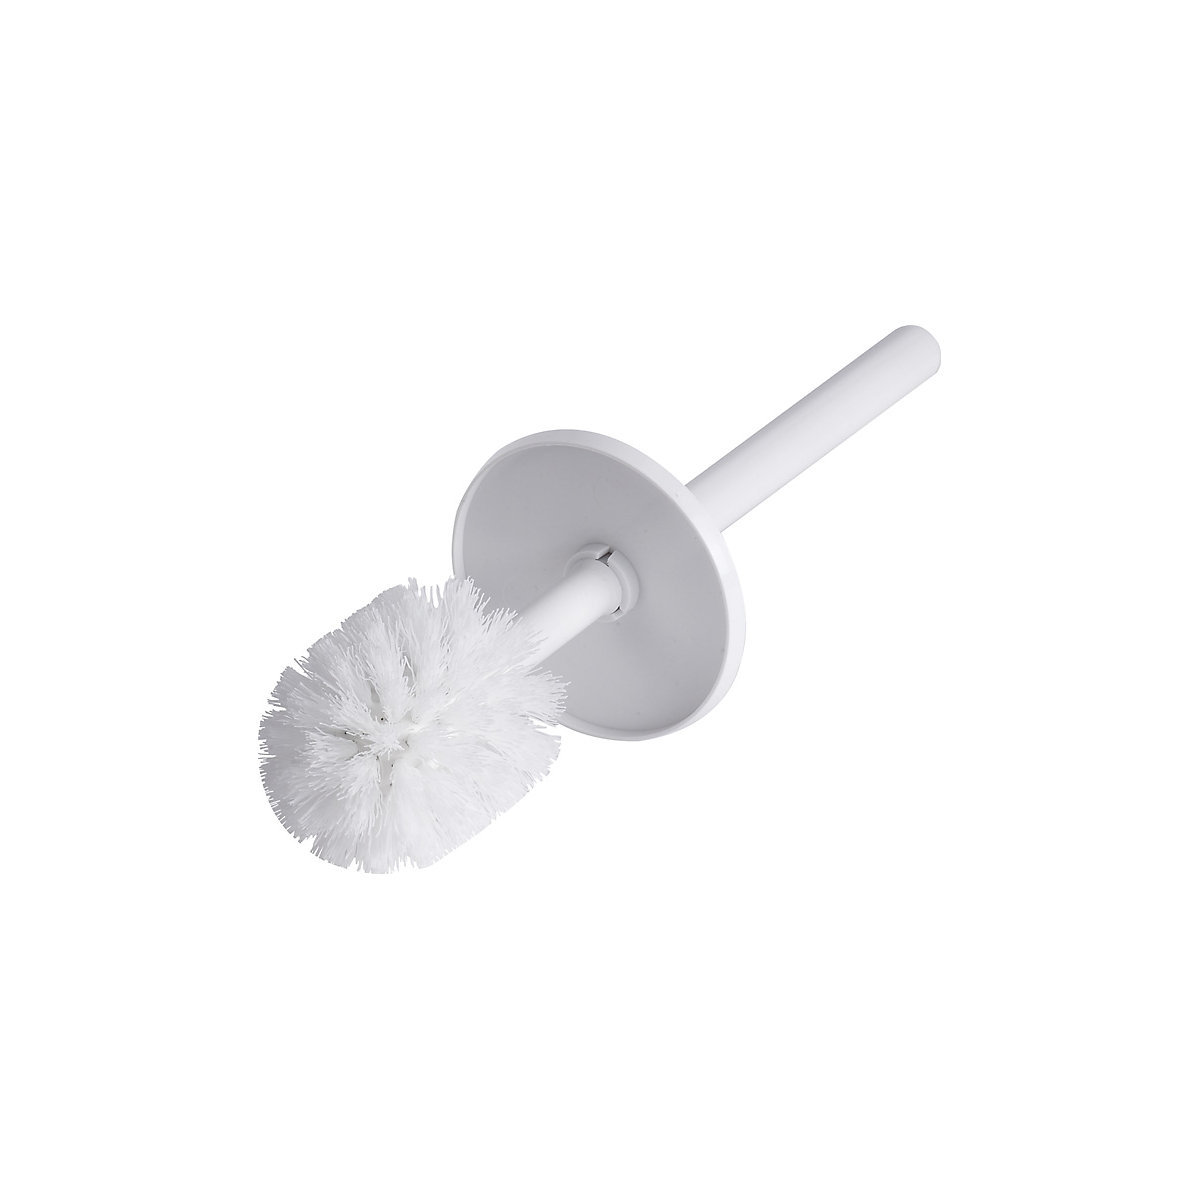 ParadiseLine replacement brush head for toilet brush